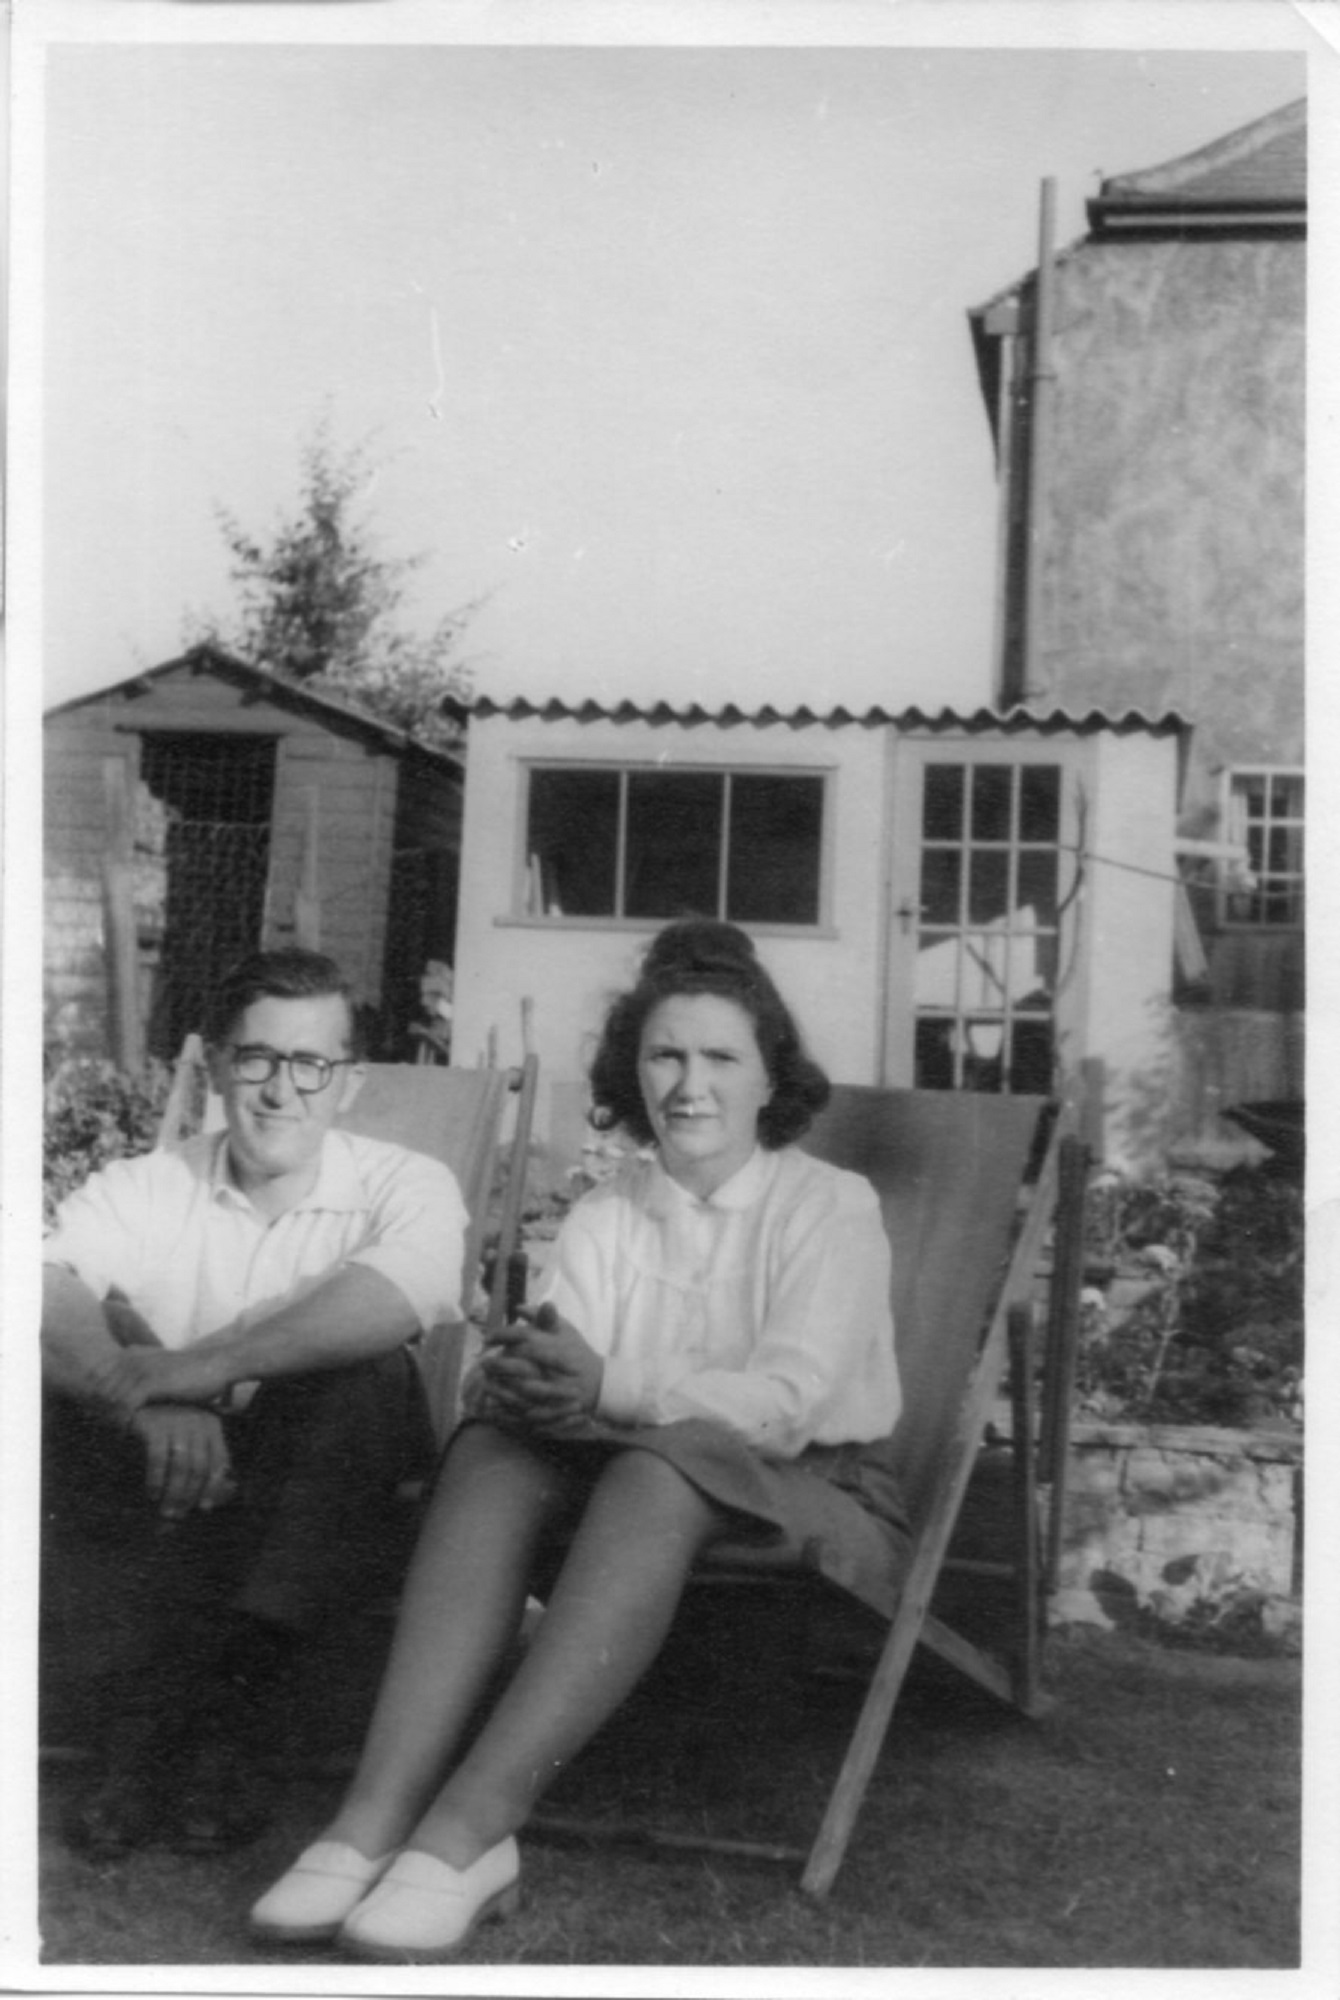 Robert and Annie Flanders. 7 Hind Grove, Poplar, E.14. late 1940s.